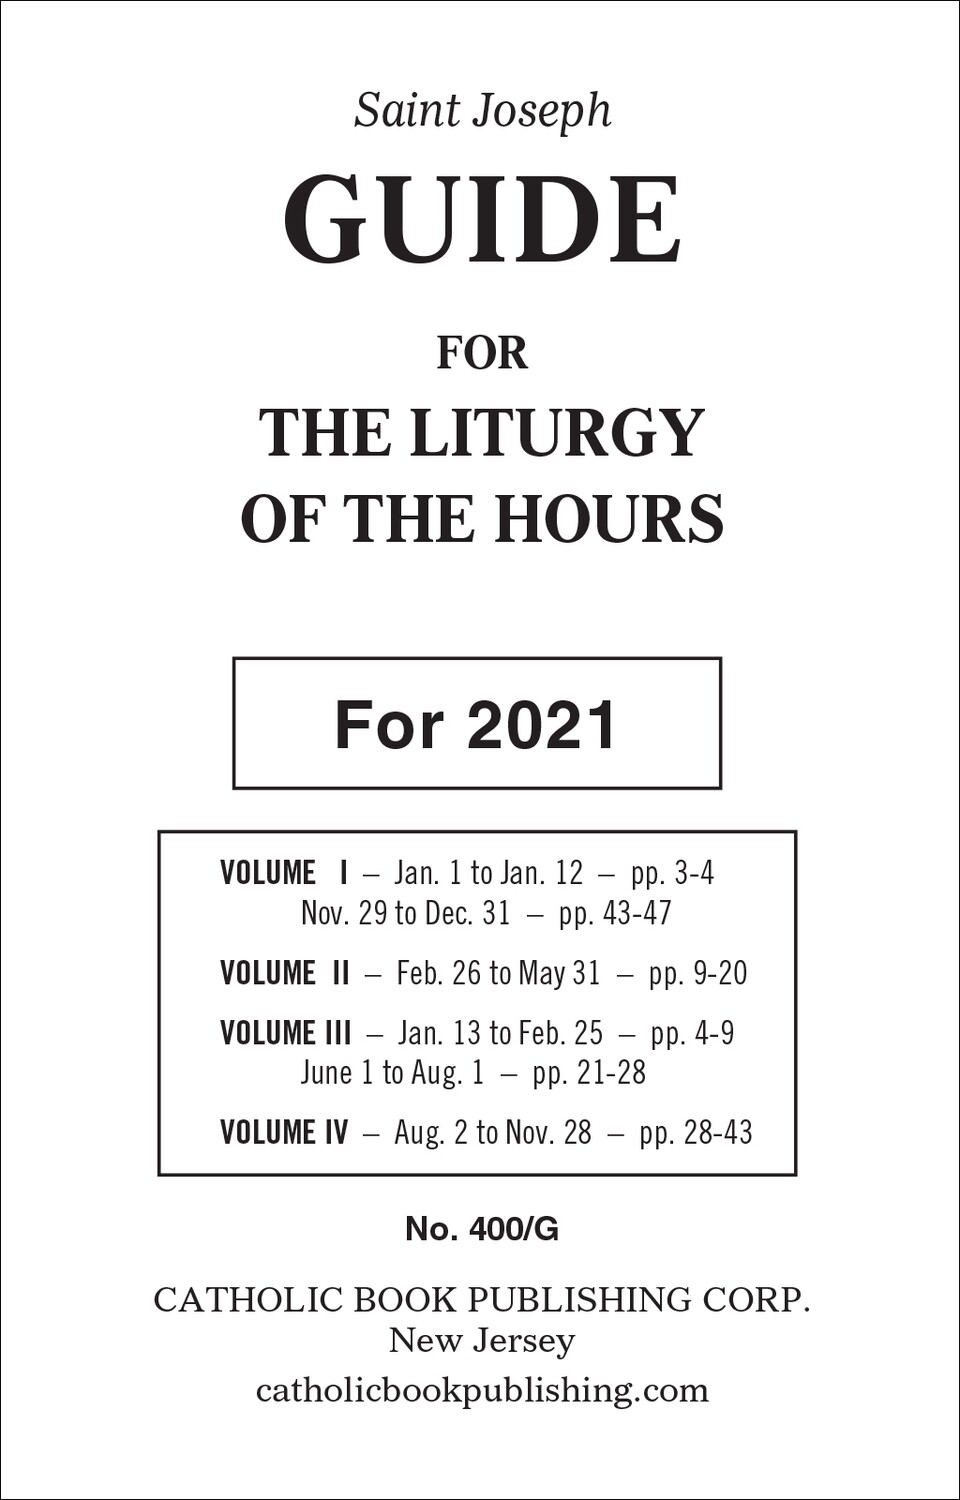 St Joseph Guide for Liturgy of the Hours  400/G